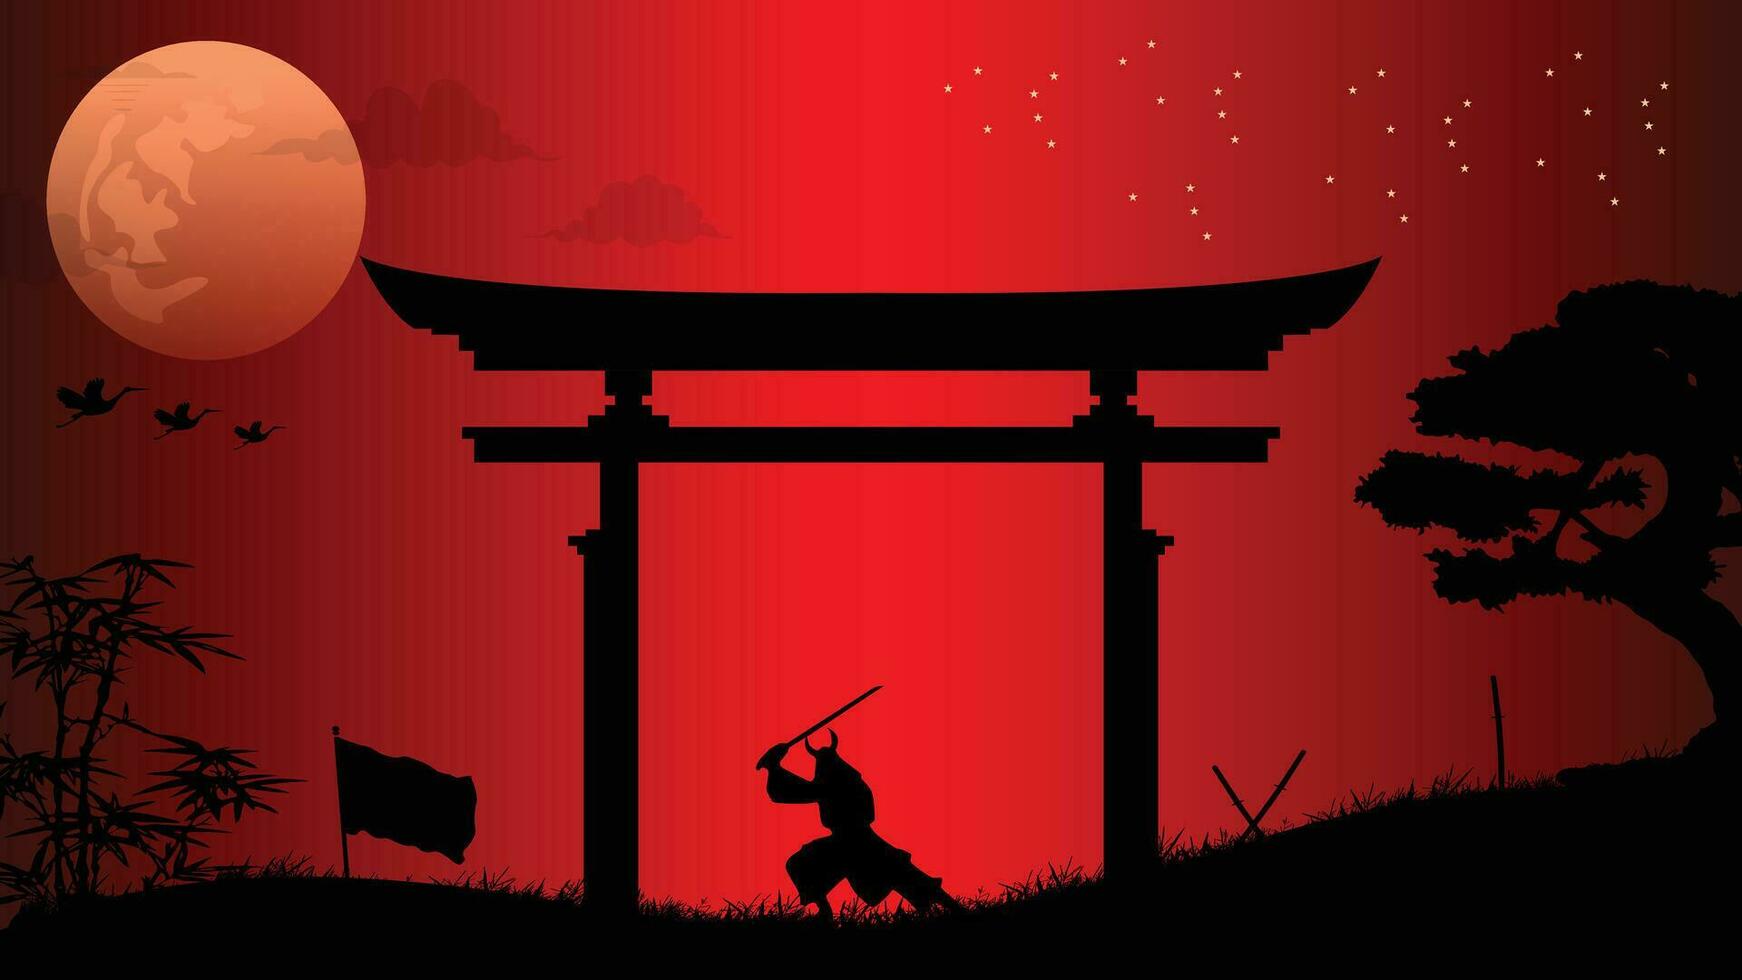 illustration vector graphic of Ninja, Assassin, Samurai training at night on a full moon. Perfect for wallpaper, poster, etc.